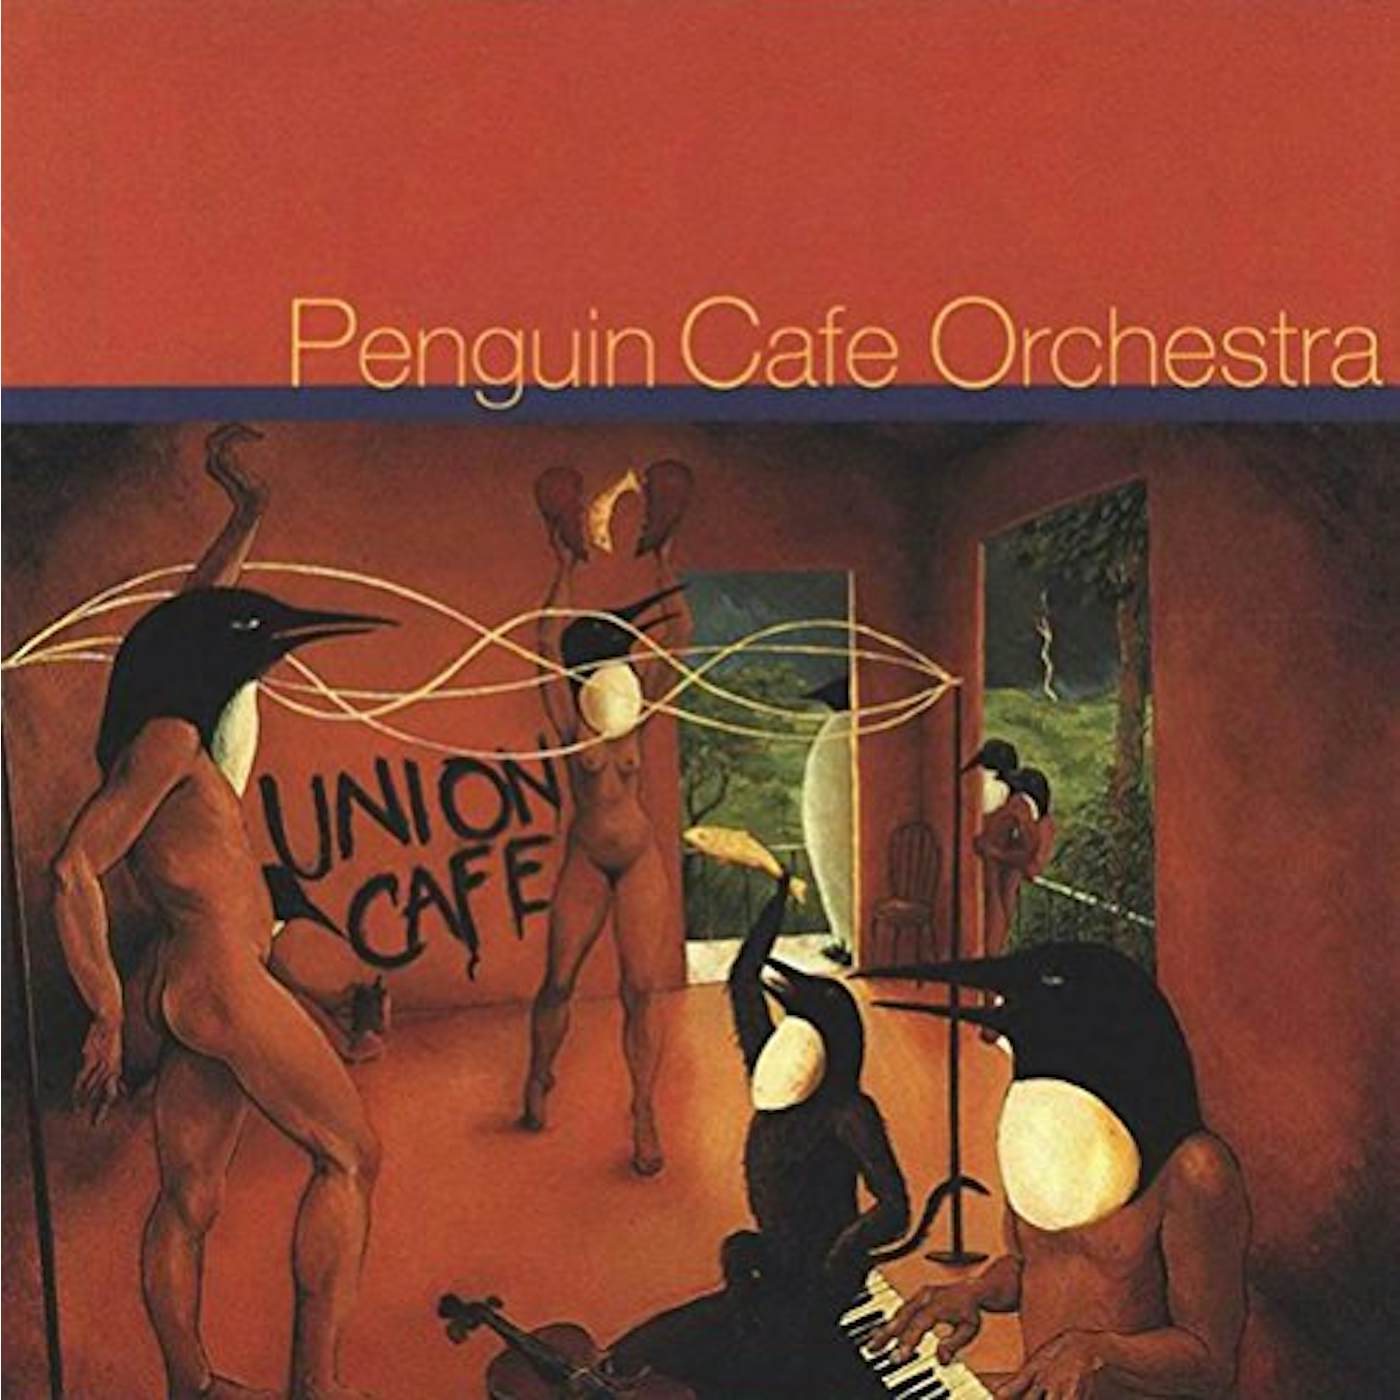 Penguin Cafe Union Cafe Vinyl Record